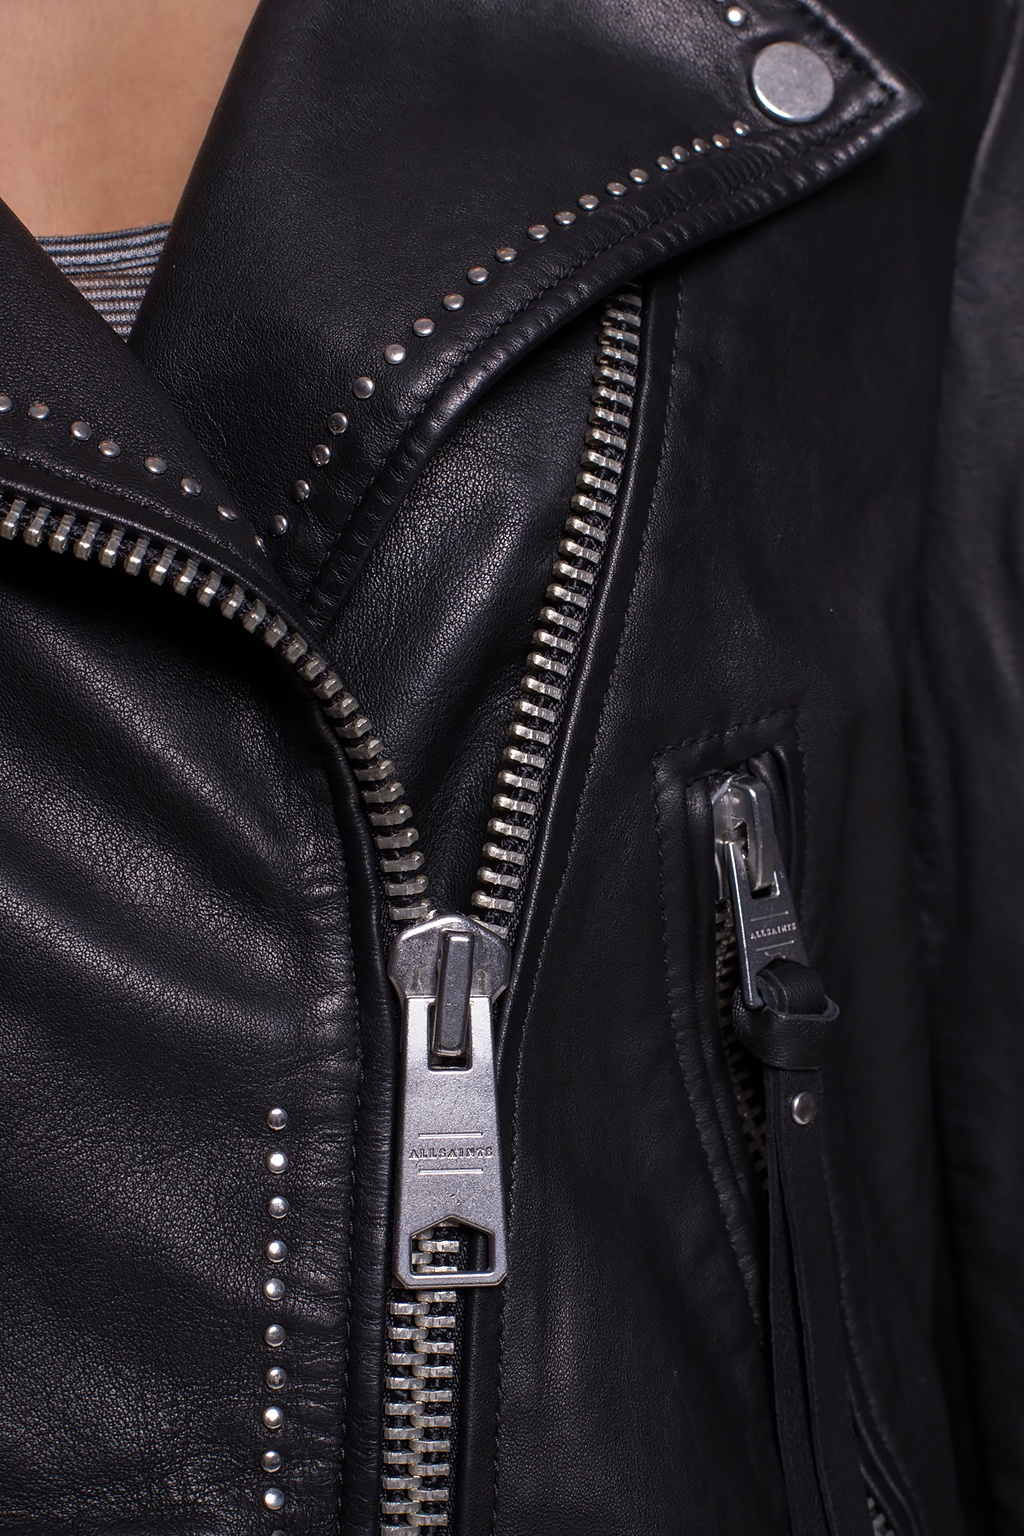 AllSaints ‘Luna’ leather jacket